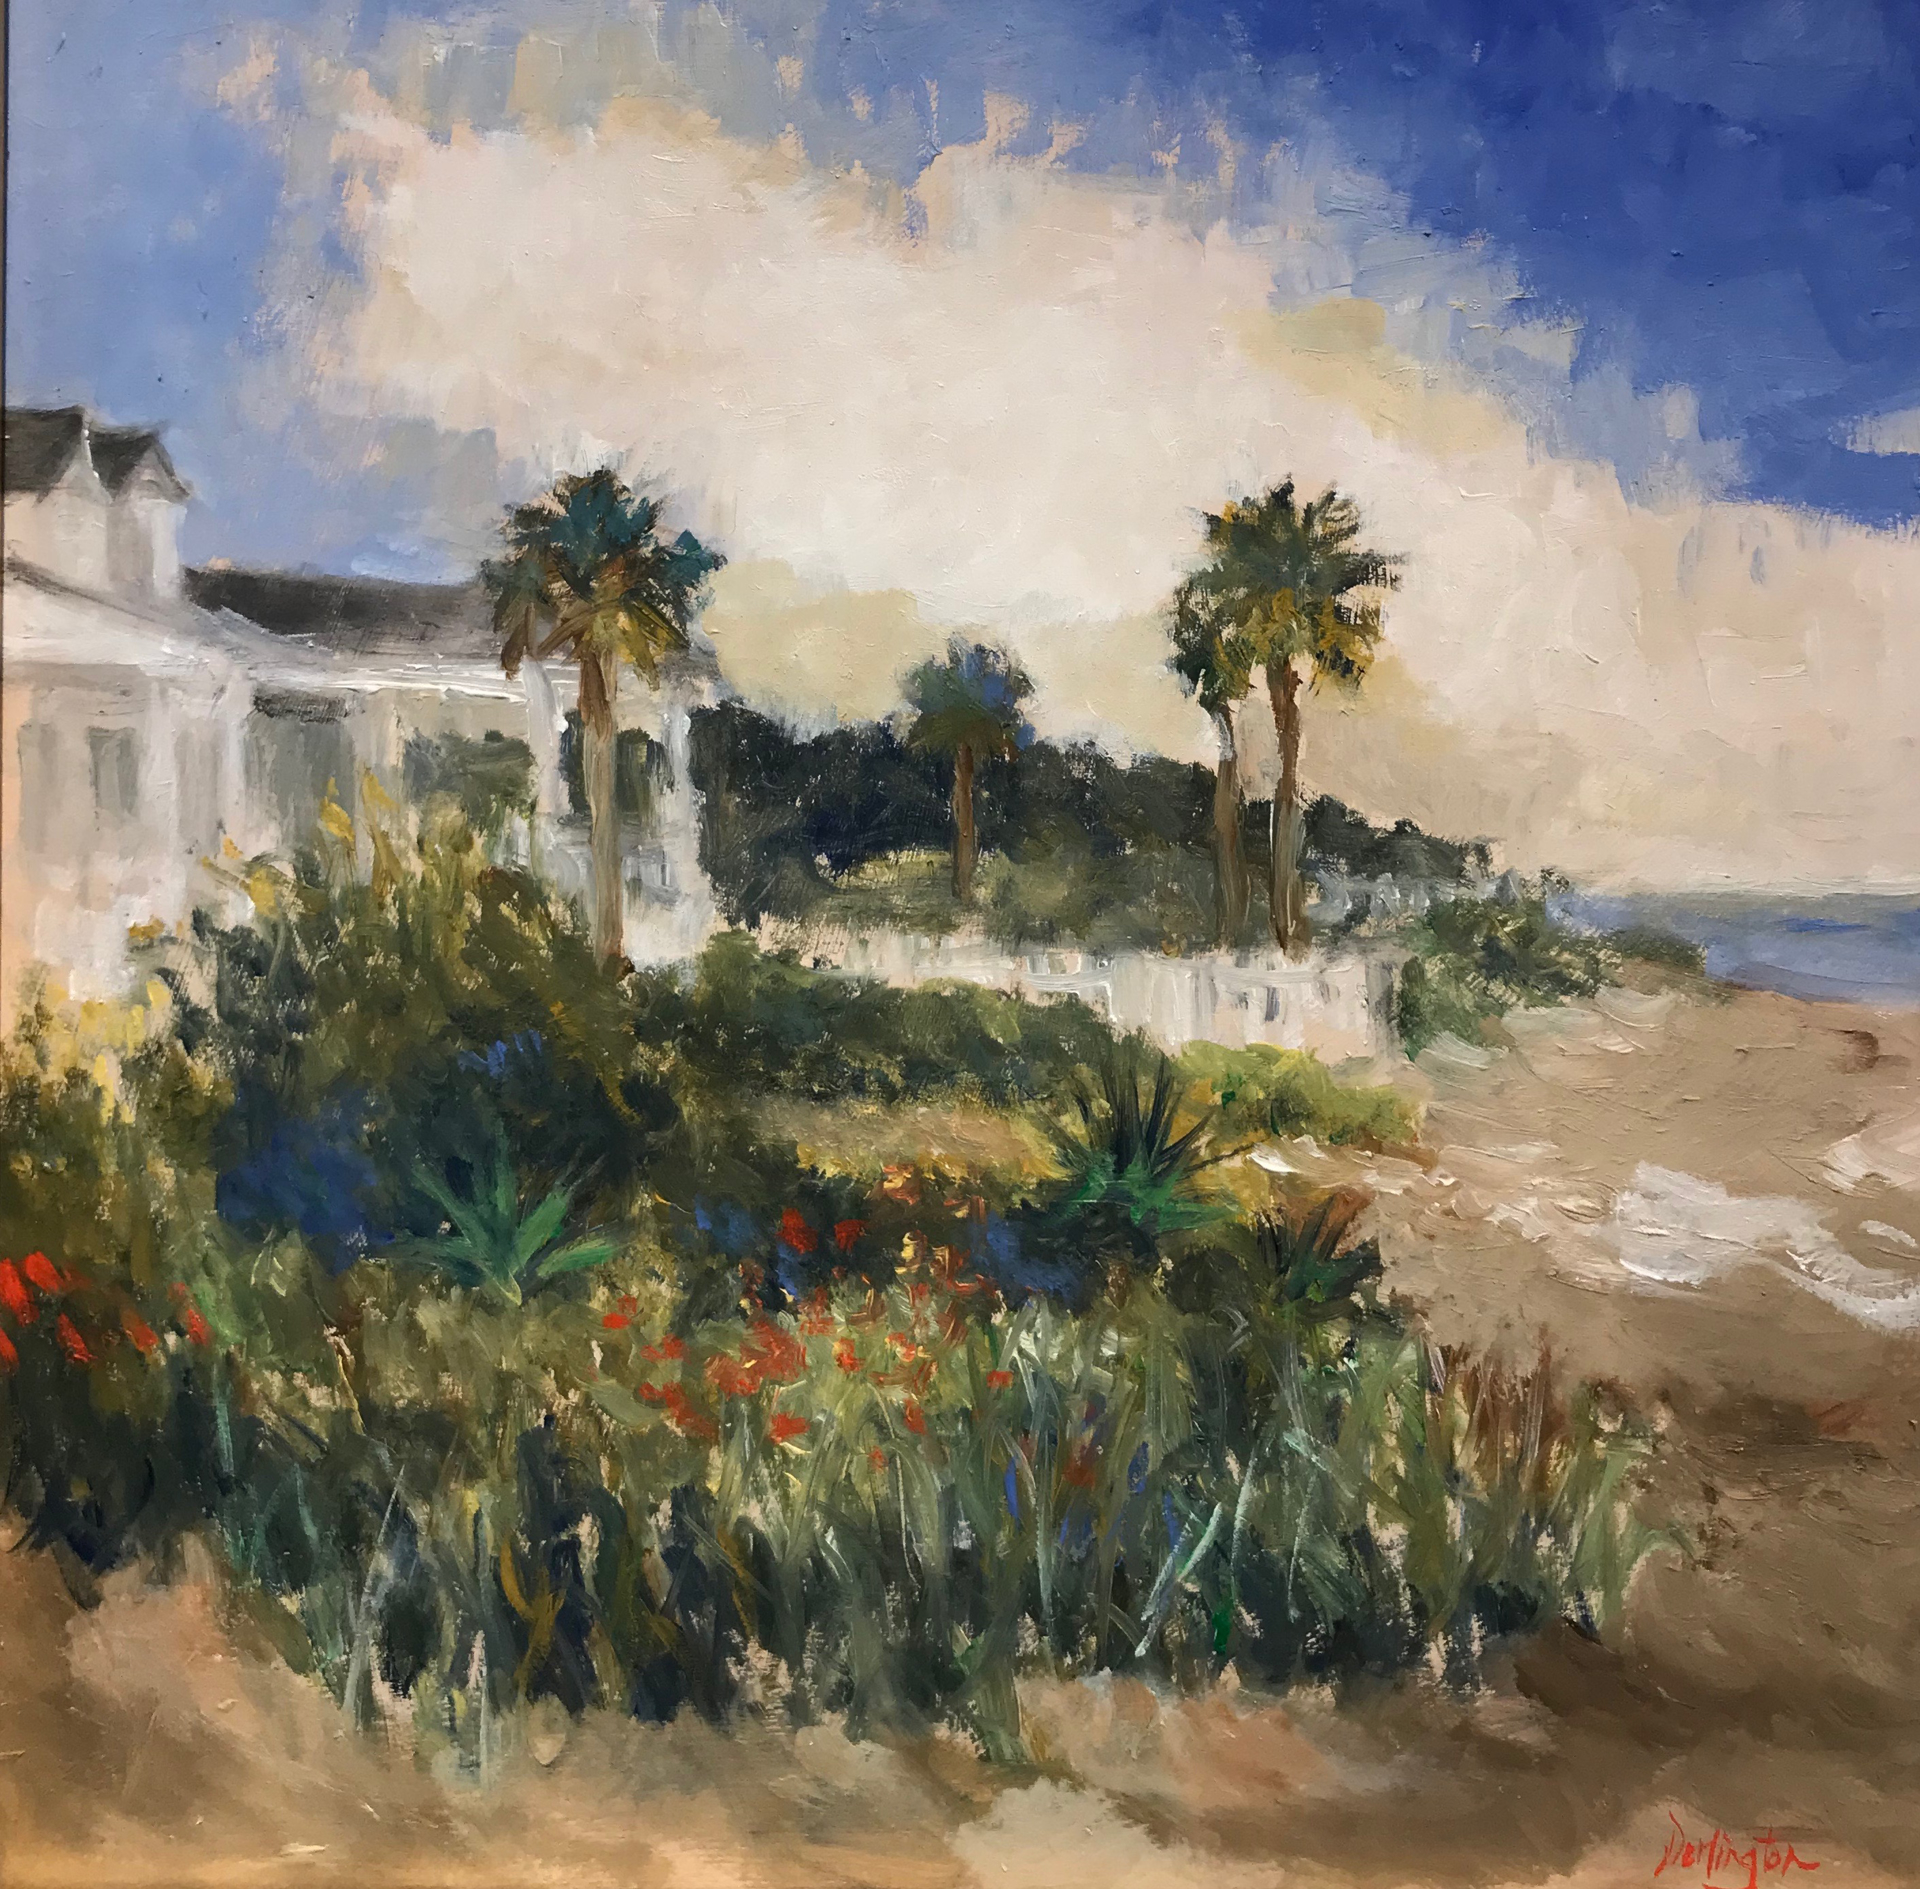 Beach at St. 10 (Author's House) by Jim Darlington